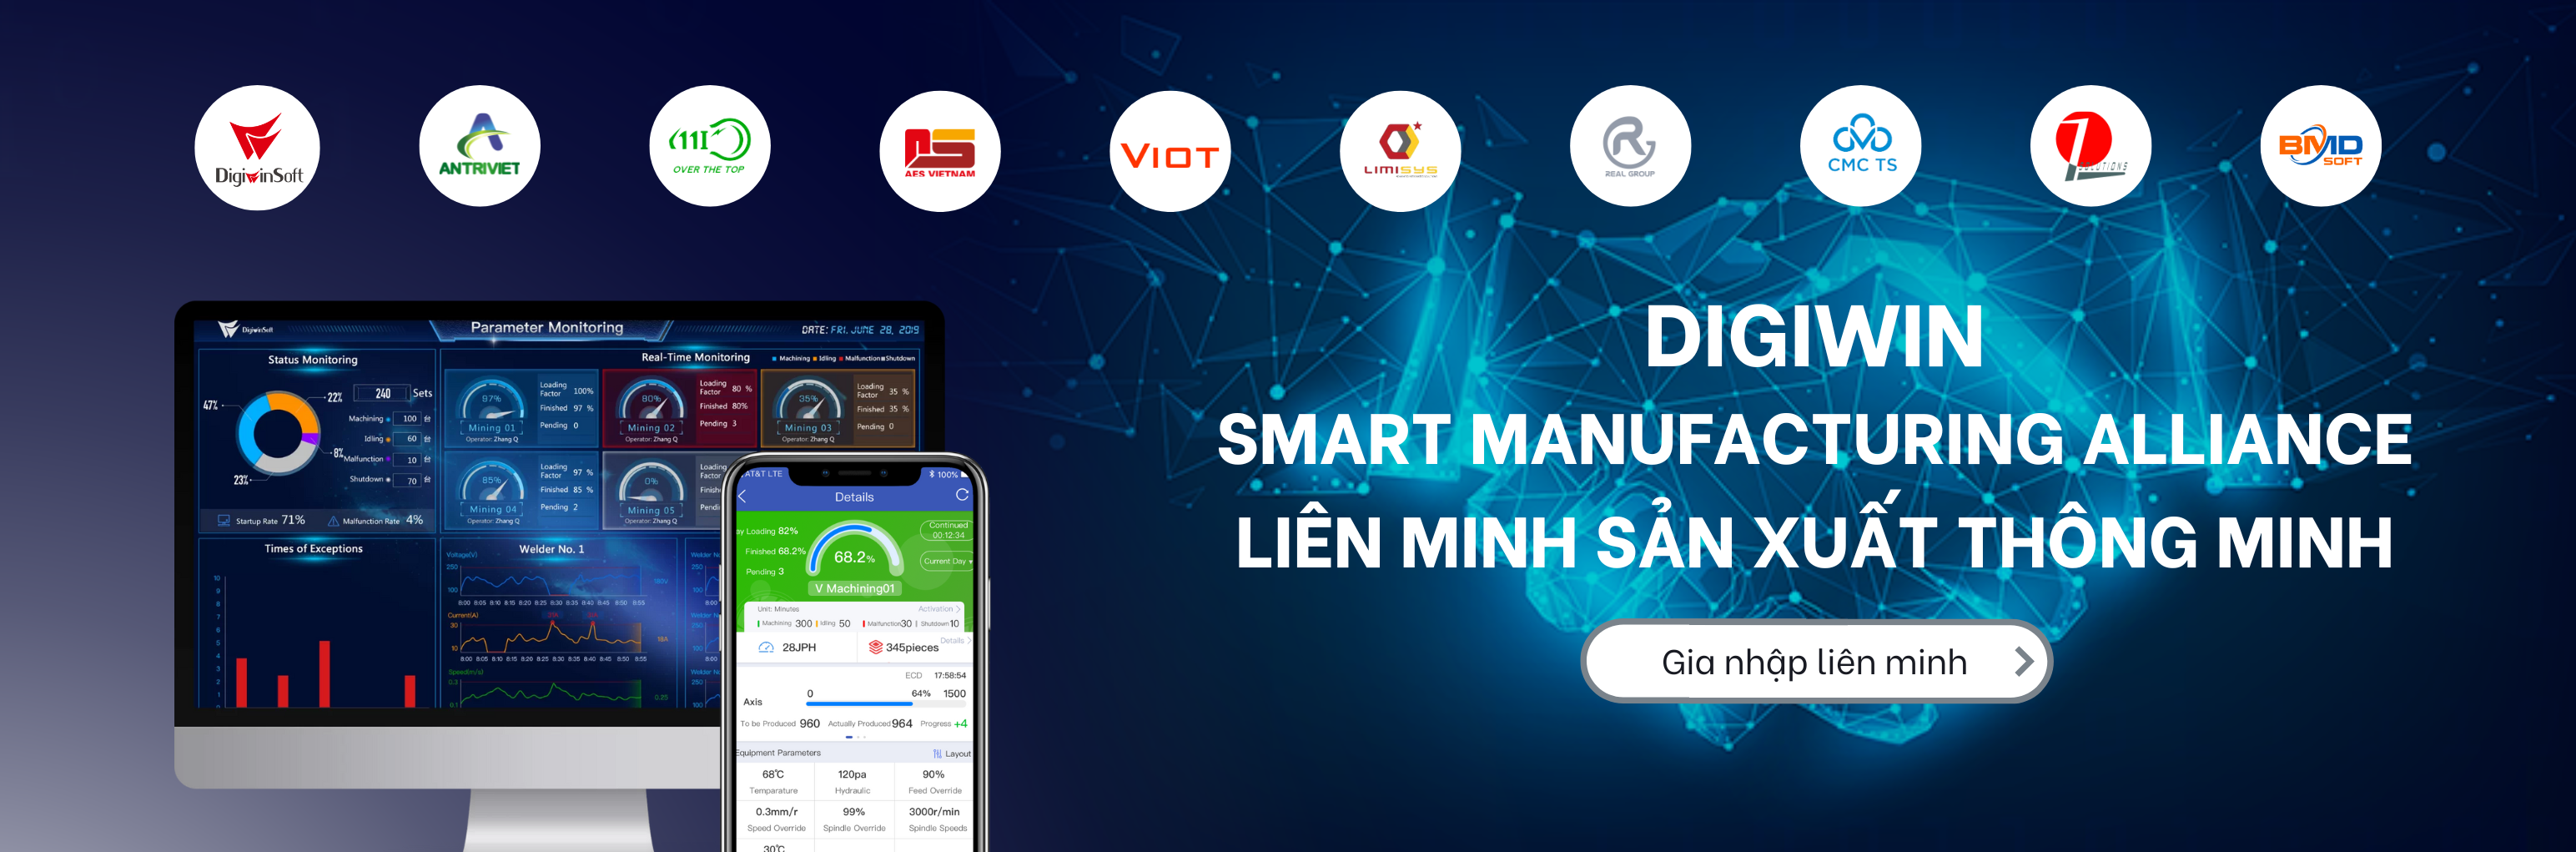 Digiwin Smart Manufacturing Alliance